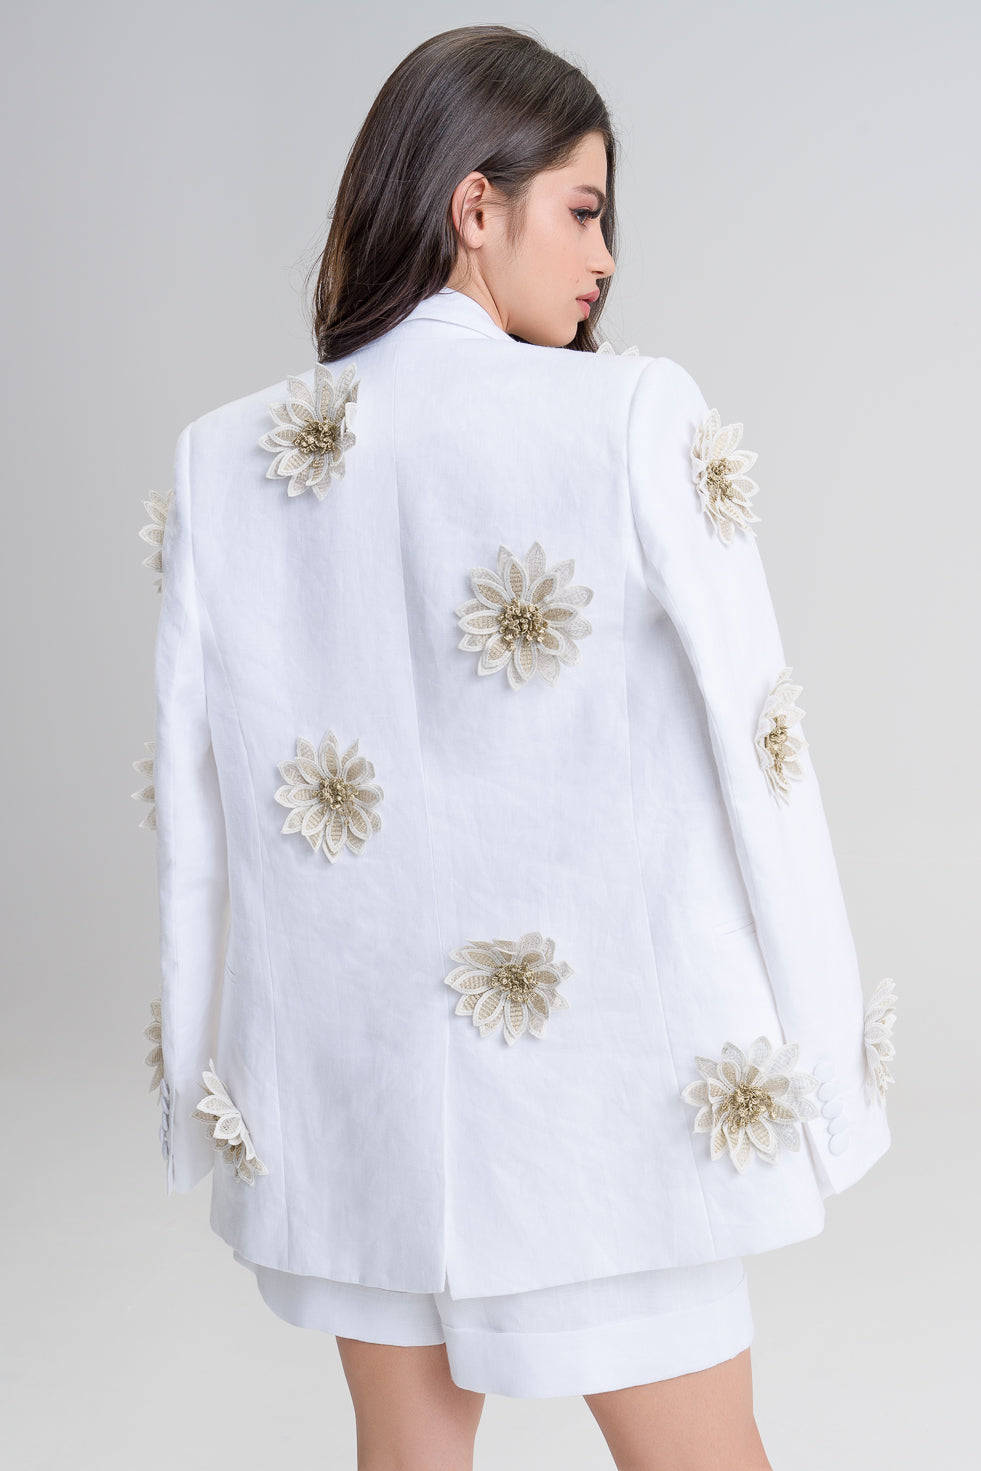 Valentina White Linen oversized flower embellished suit blazer